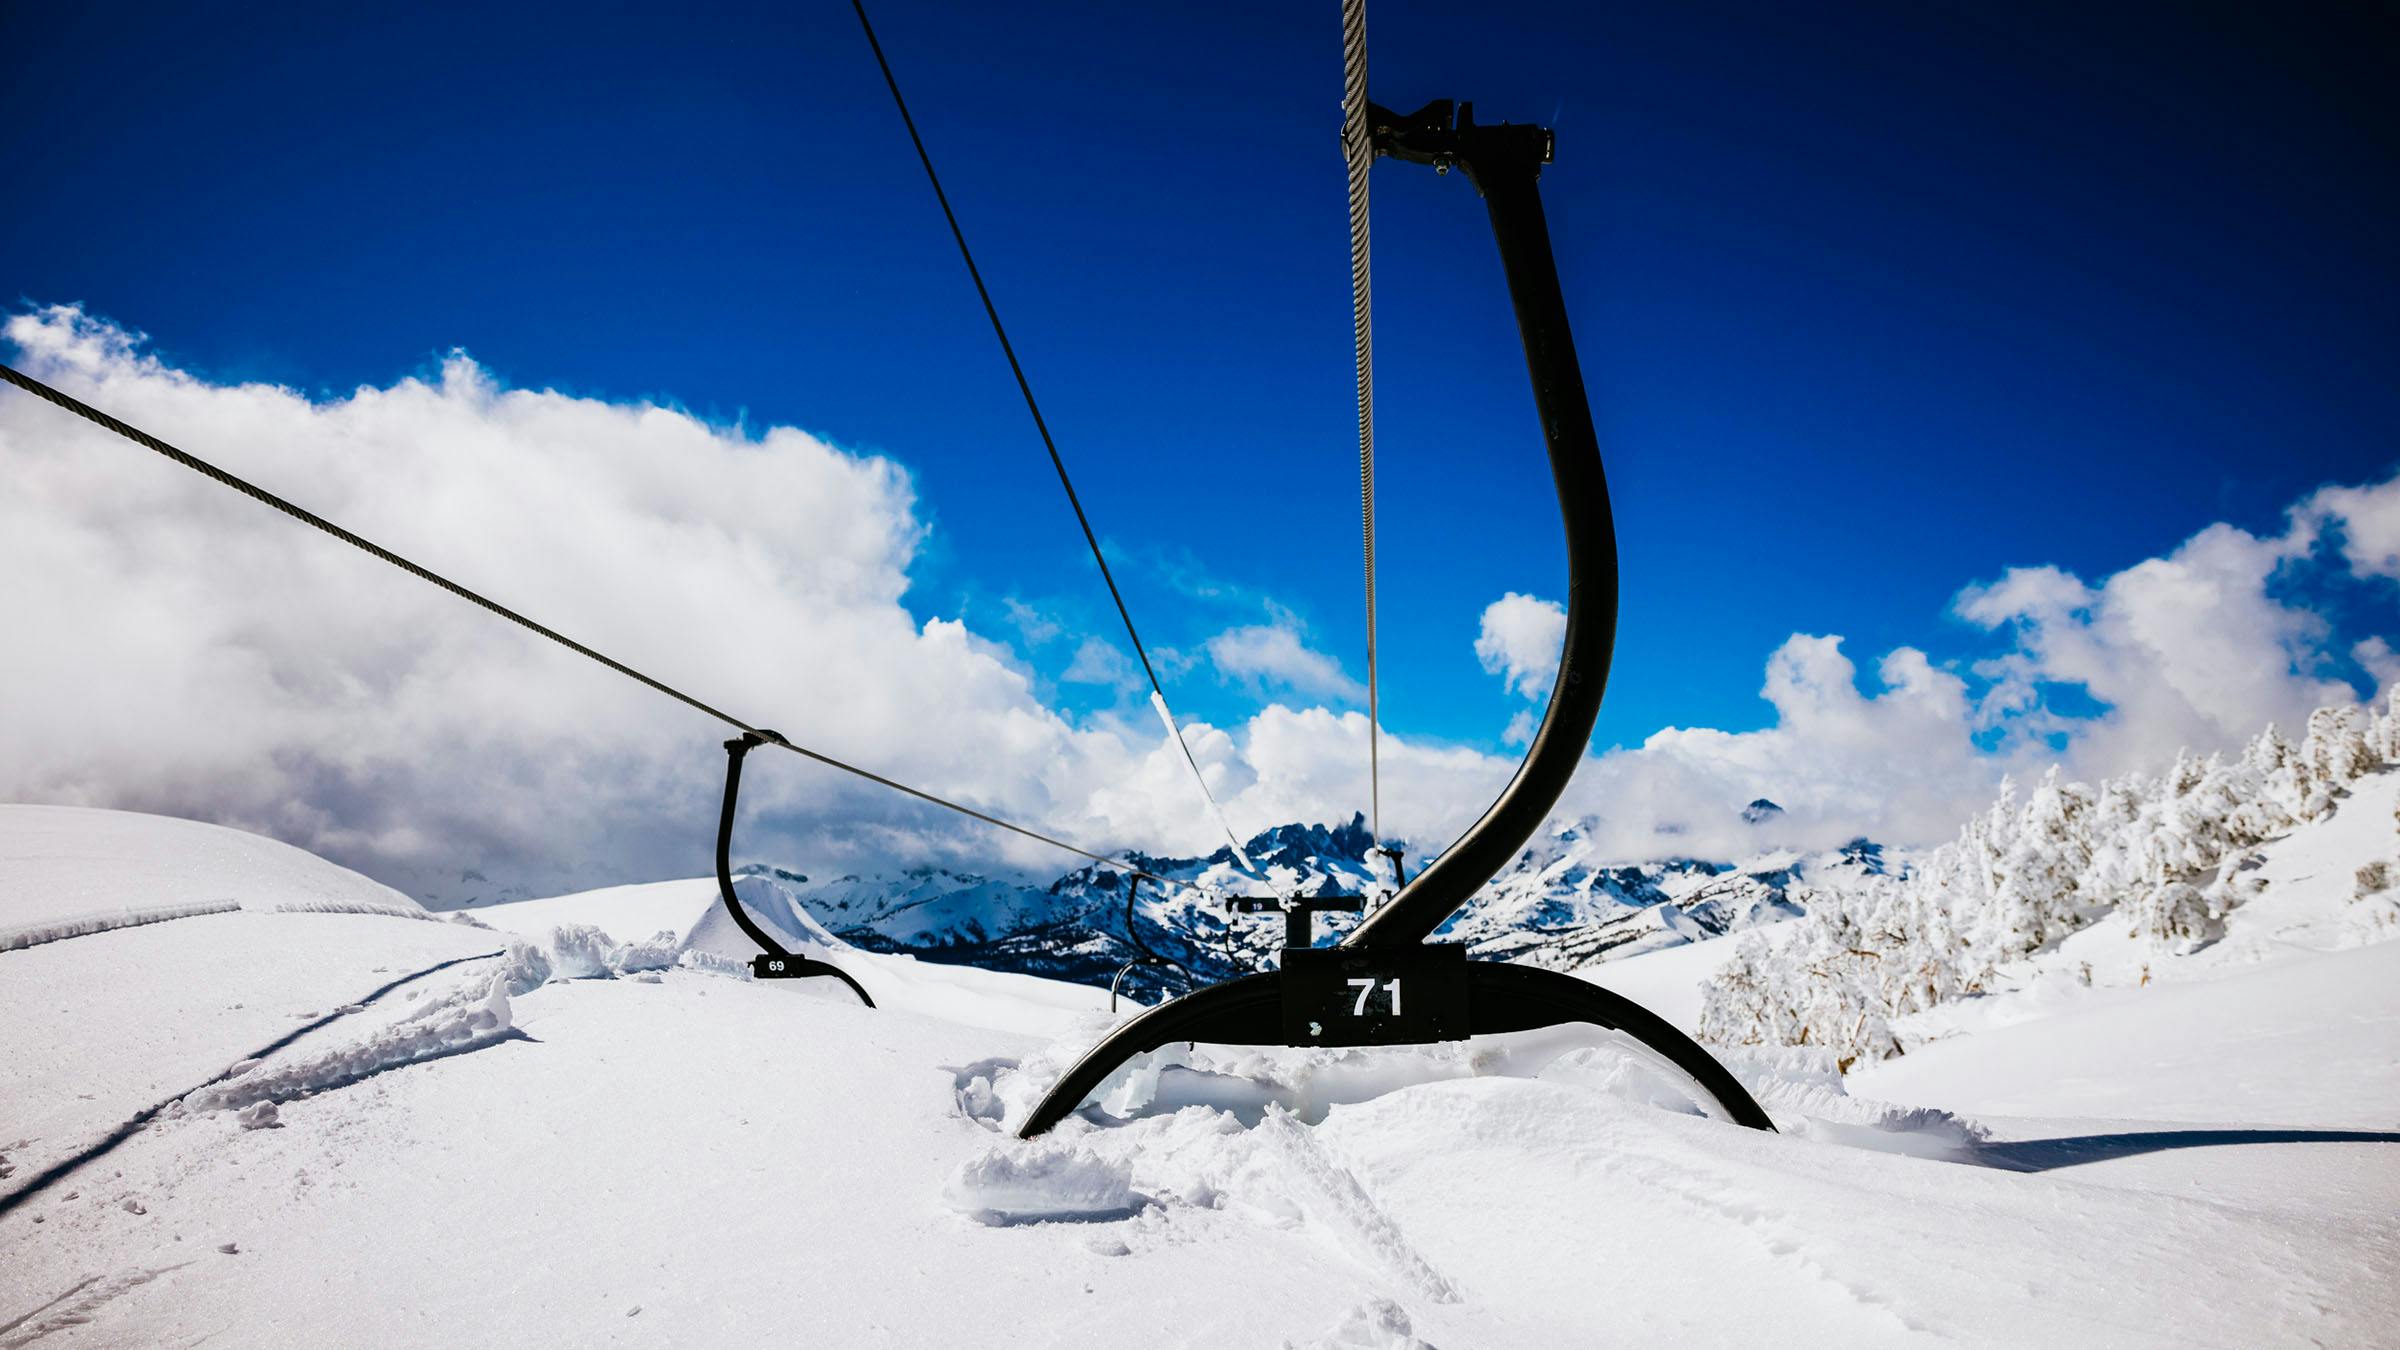 Ski lift buried under snow